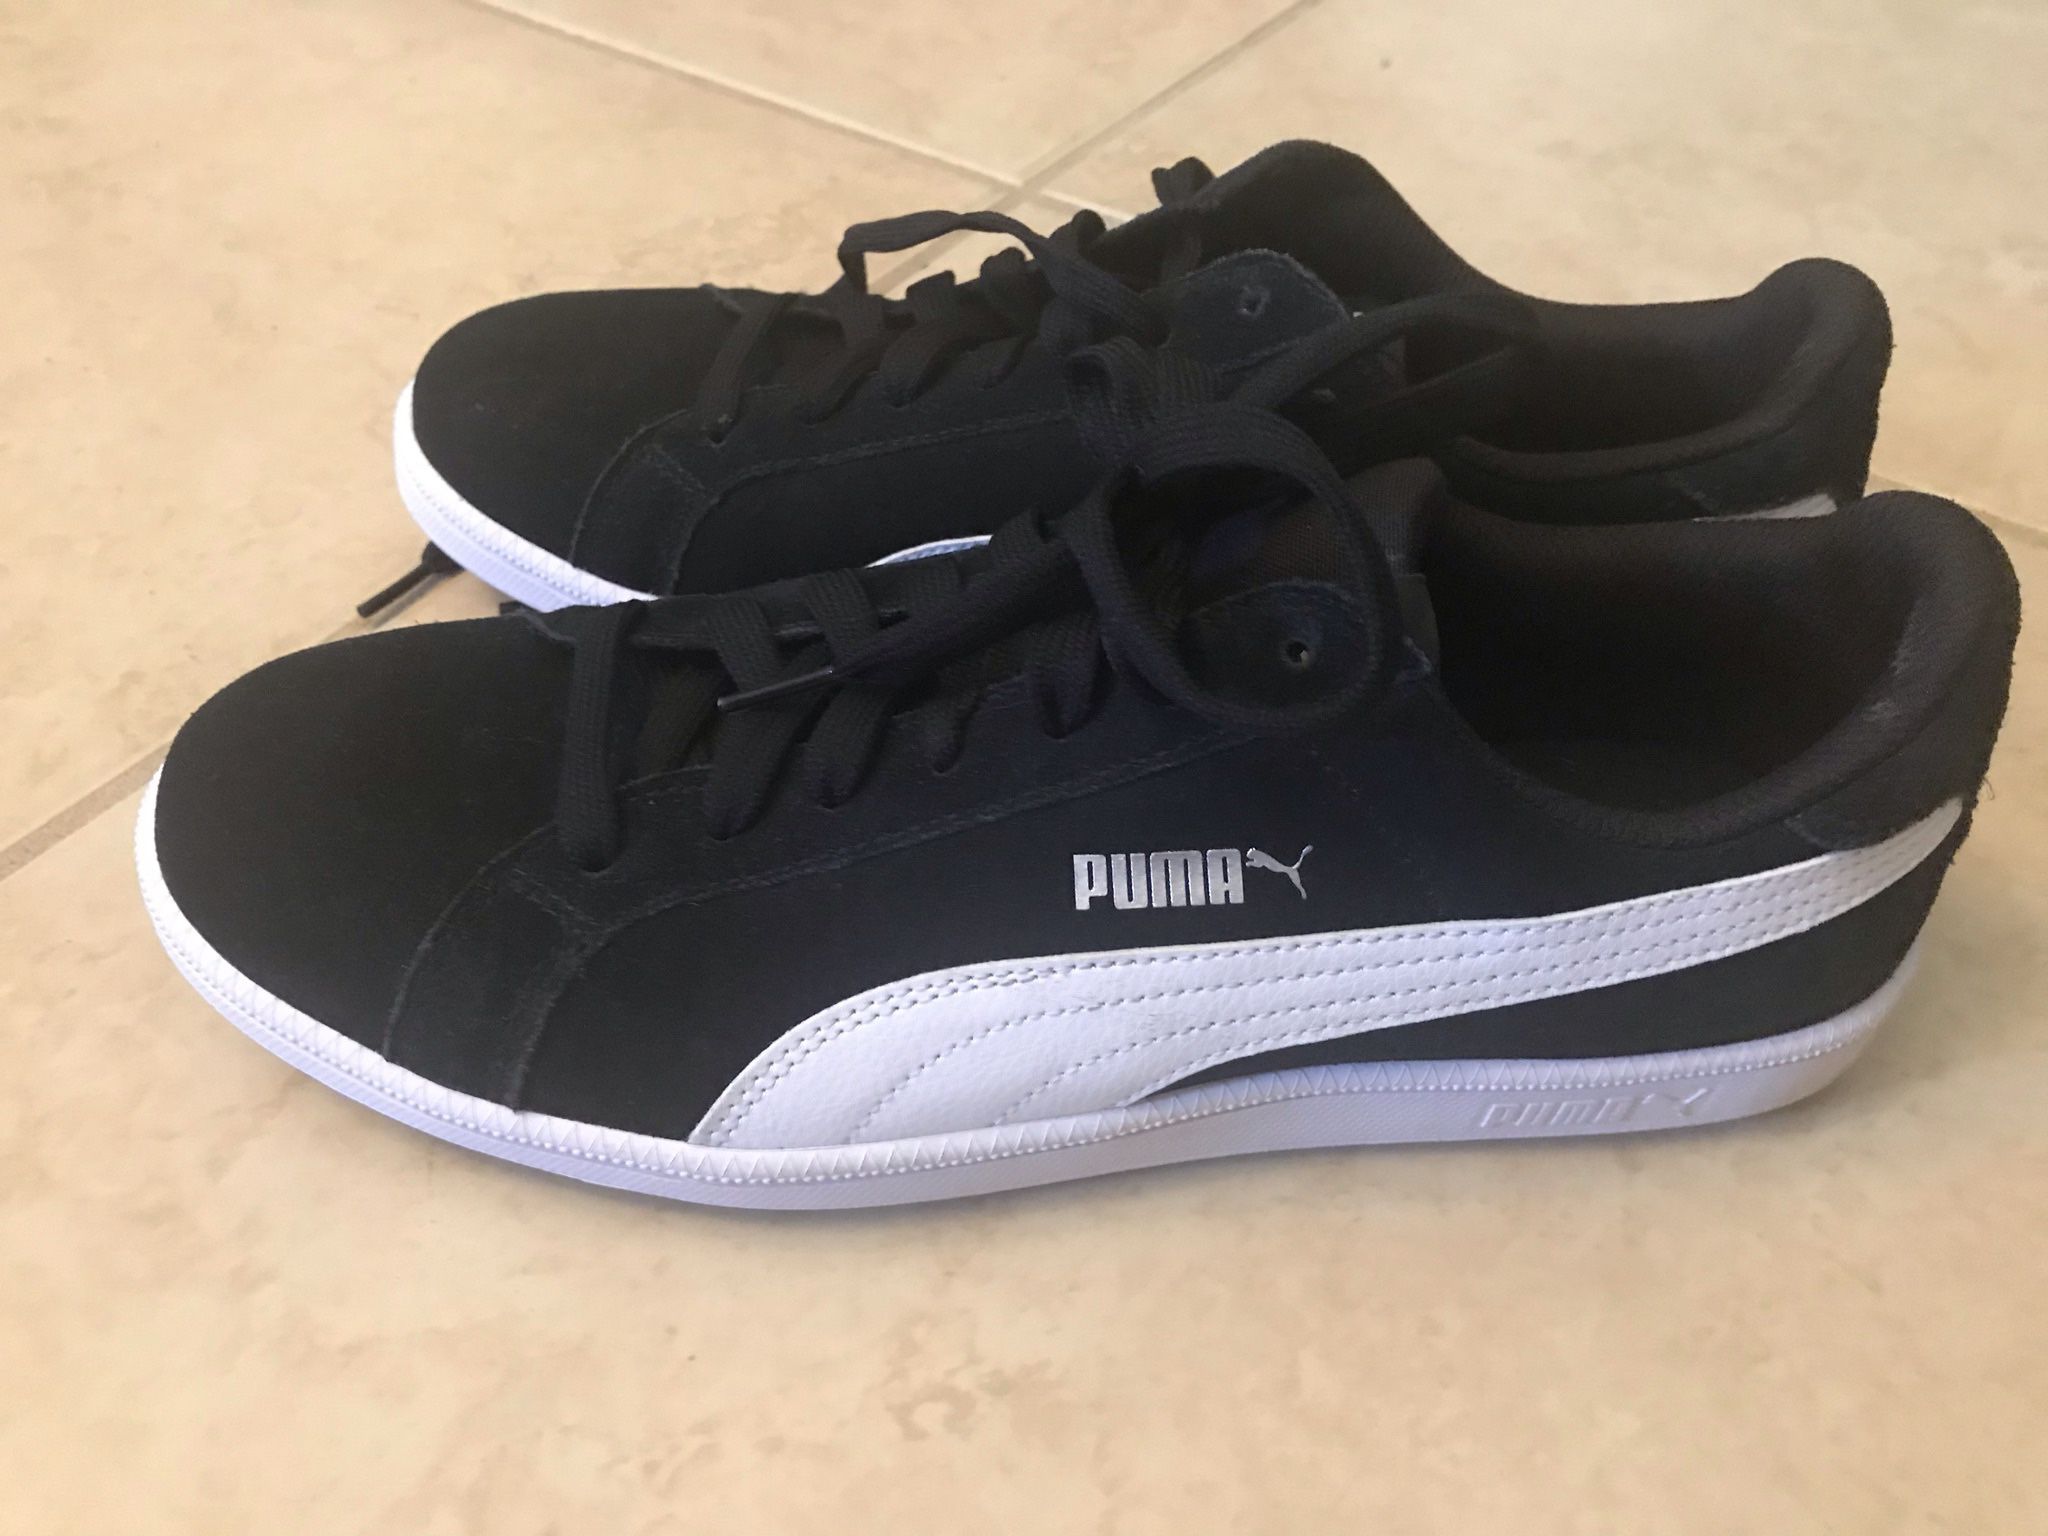 Pumas Size 9 New